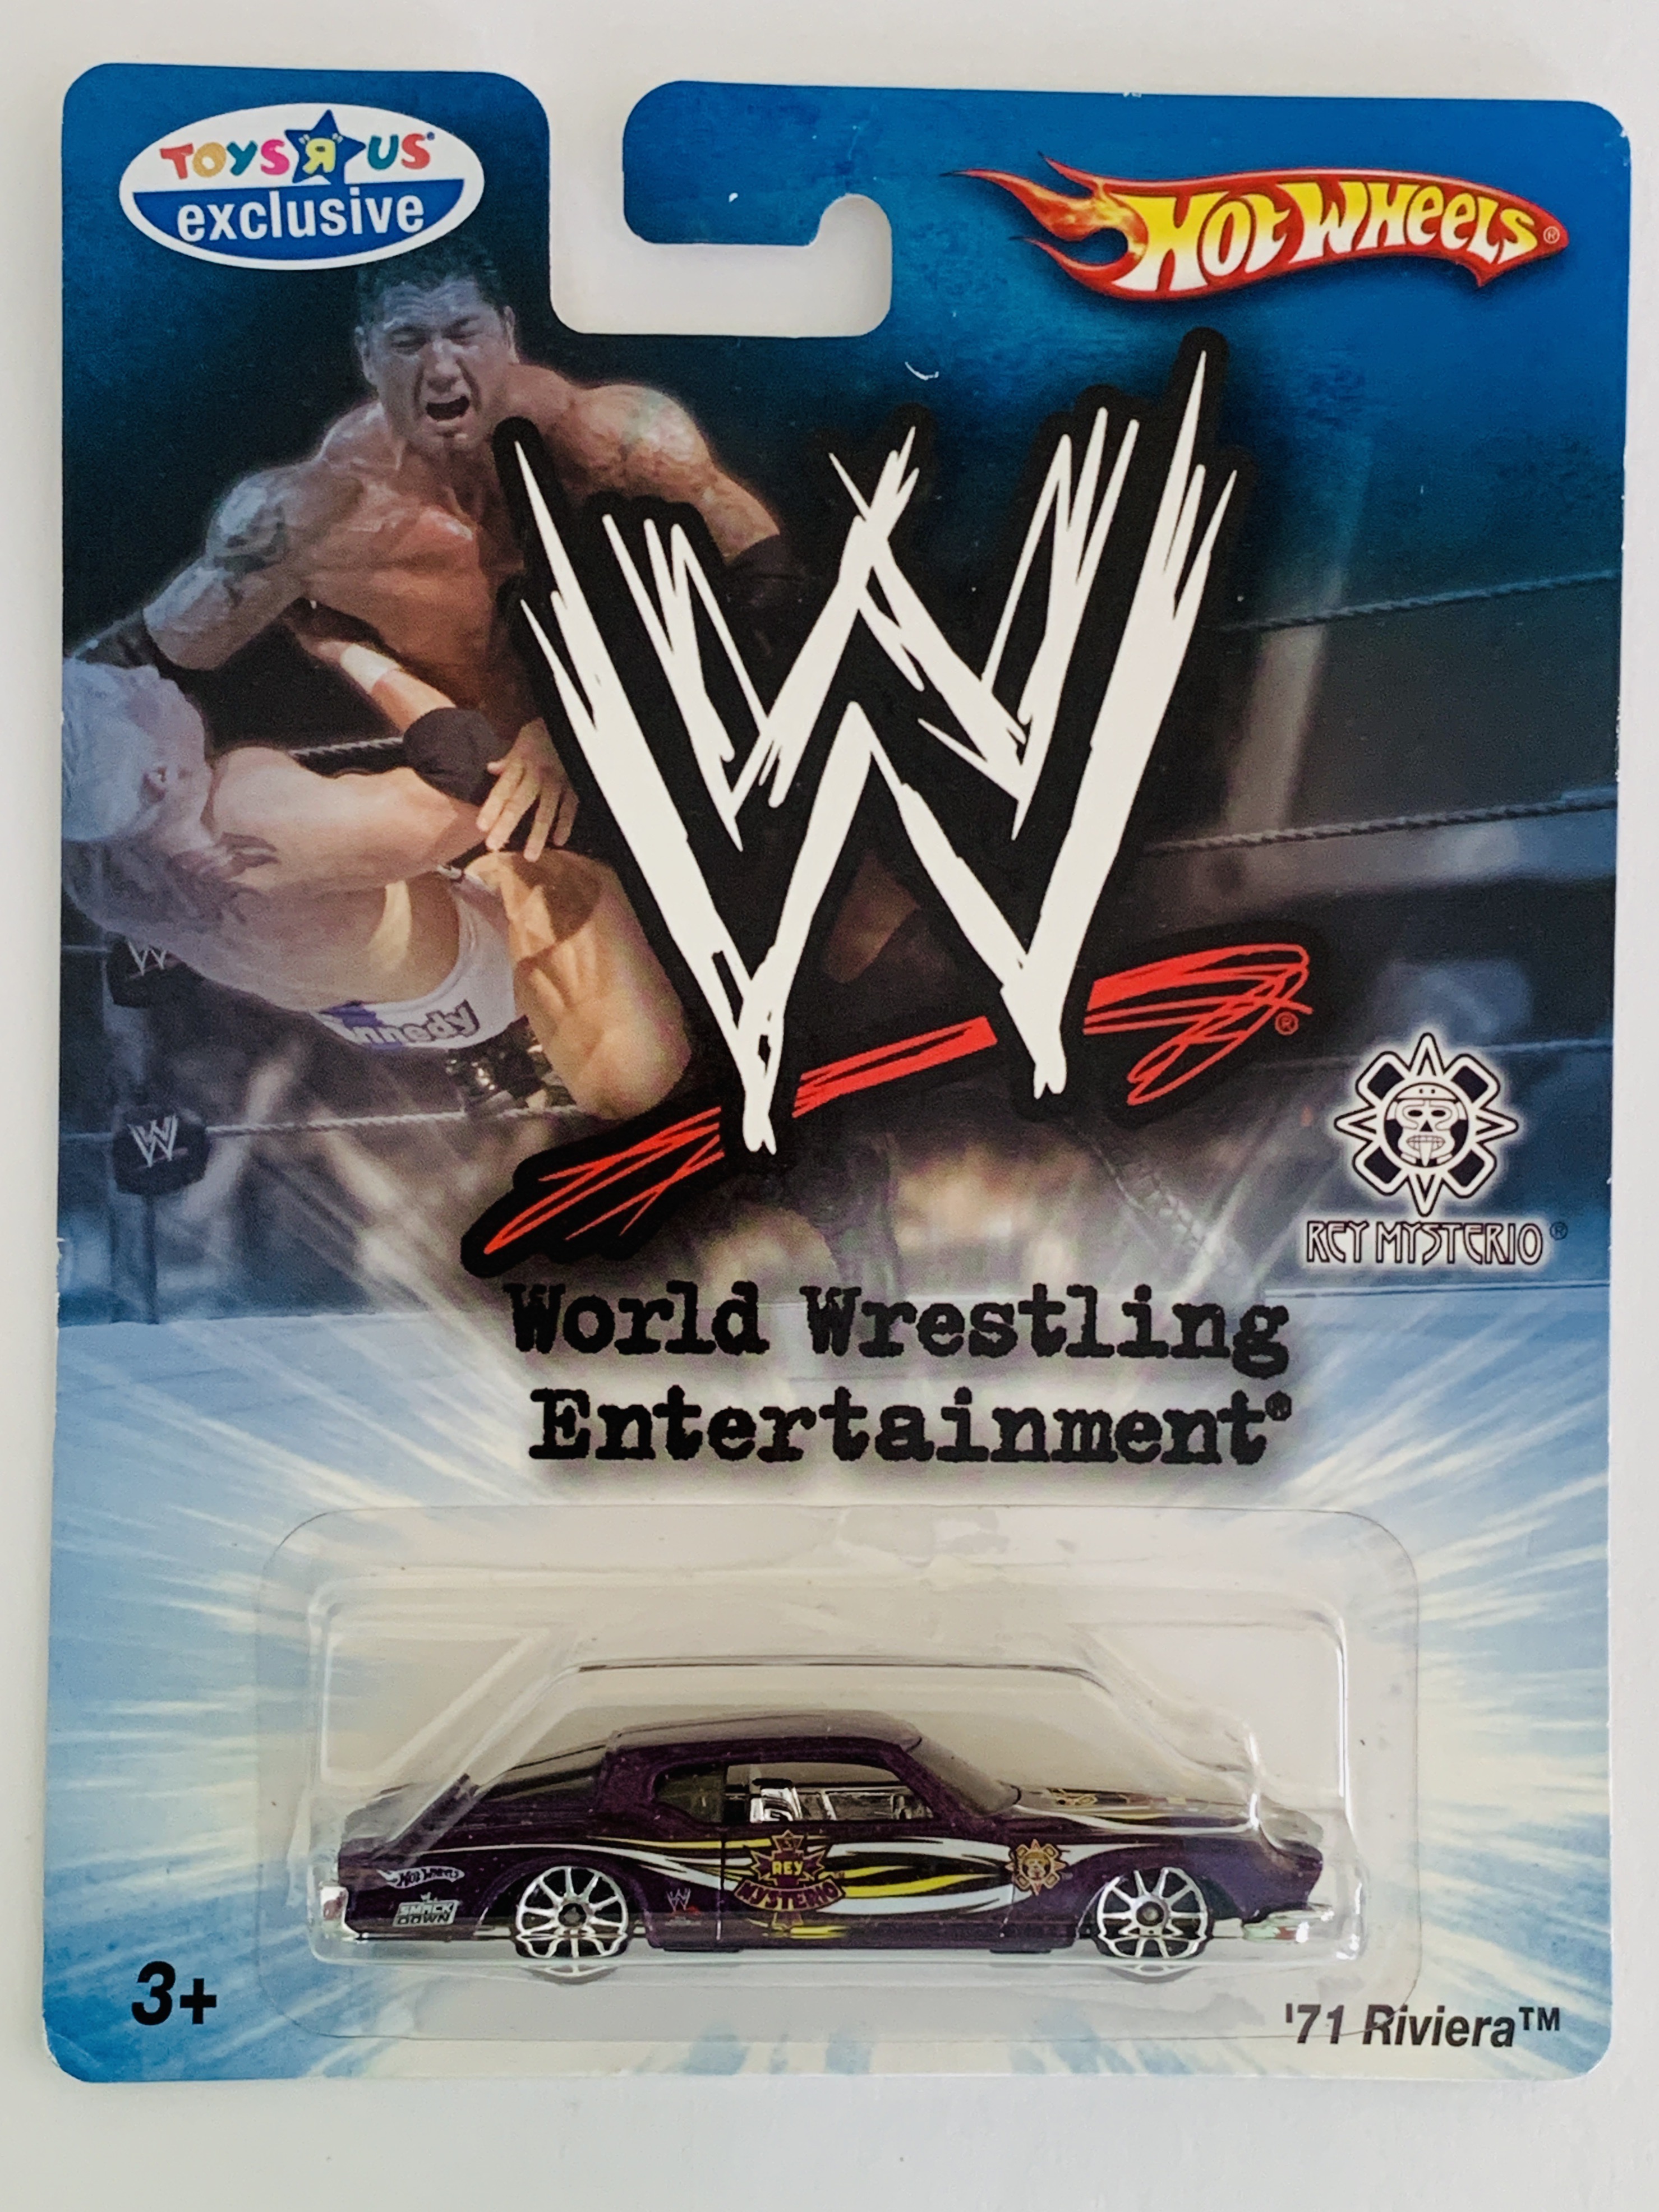 Hot Wheels Toys R Us Exclusive World Wrestling Entertainmen Rey Mysterio '71 Riviera